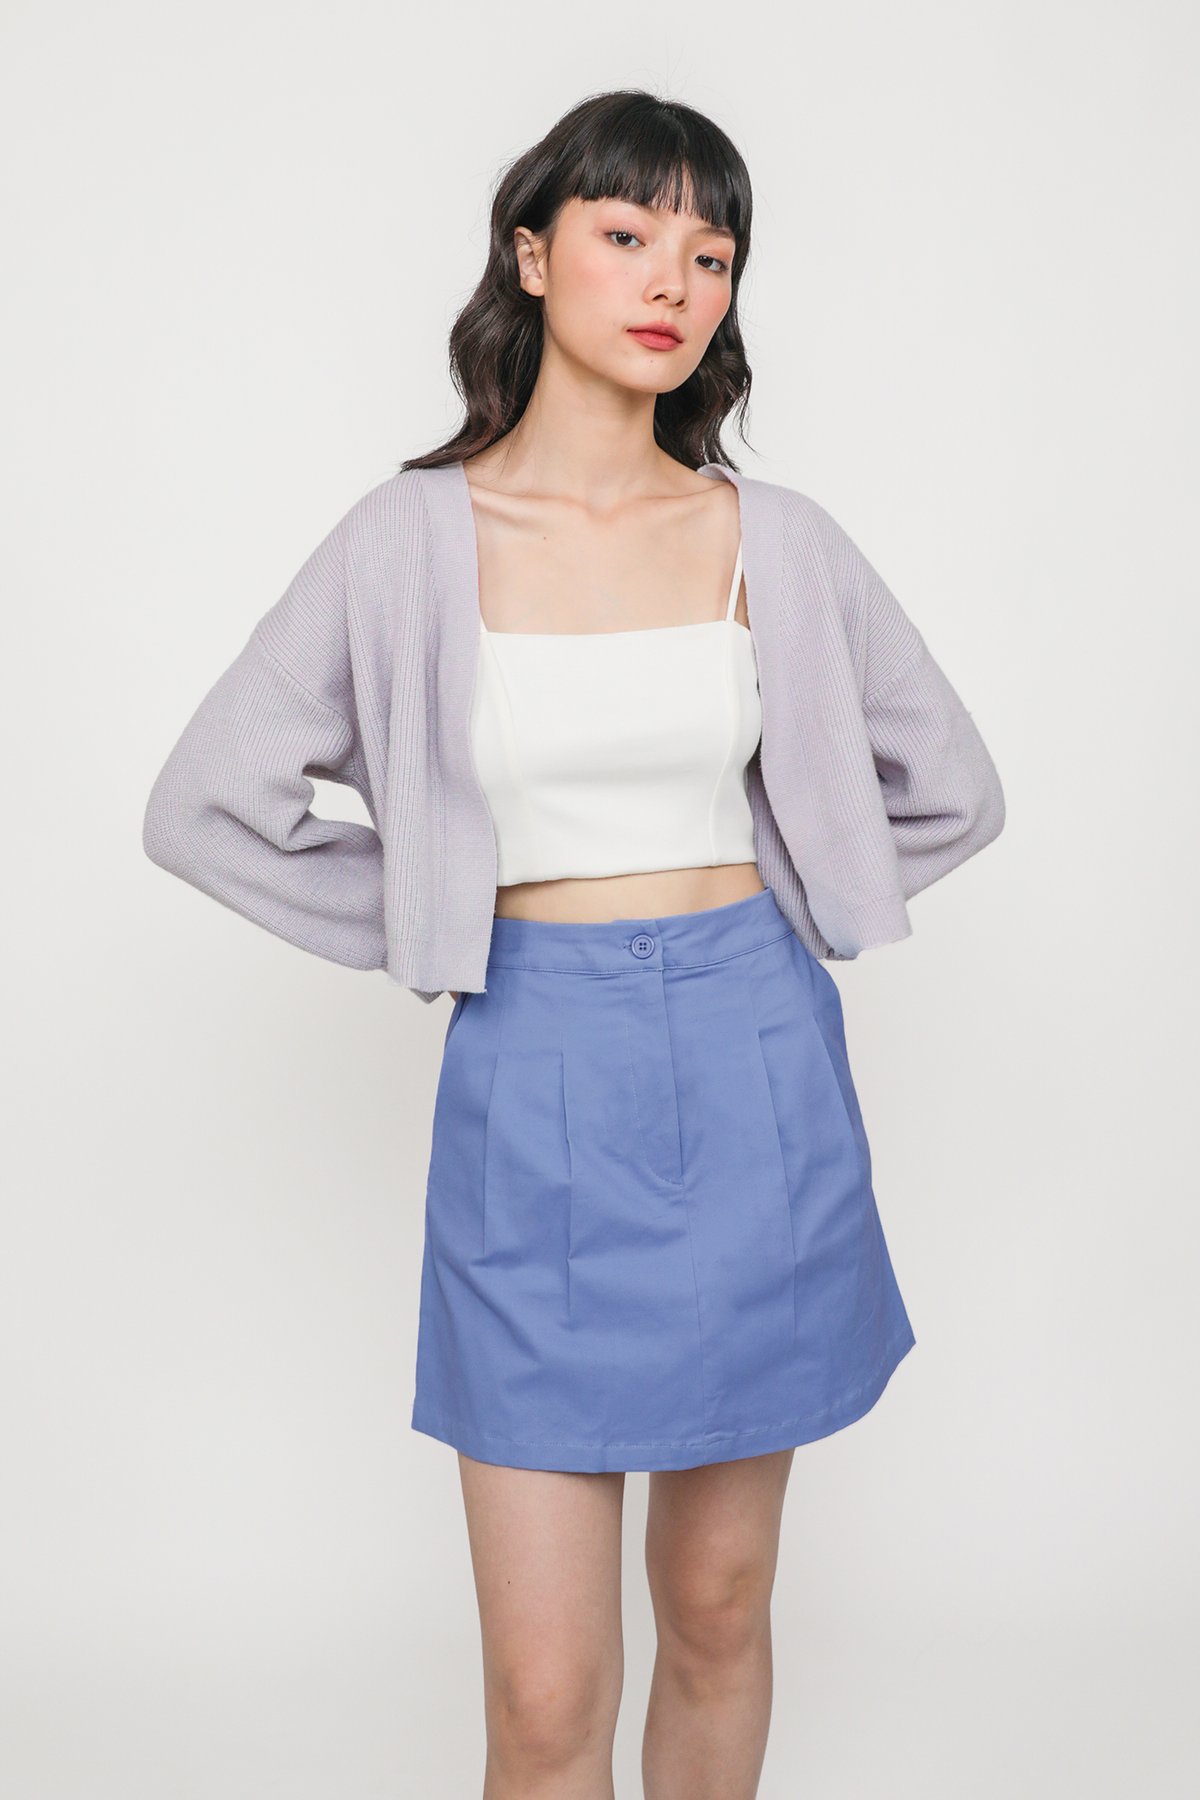 Effie Pleat Front Mini Skirt (Cornflower Blue)